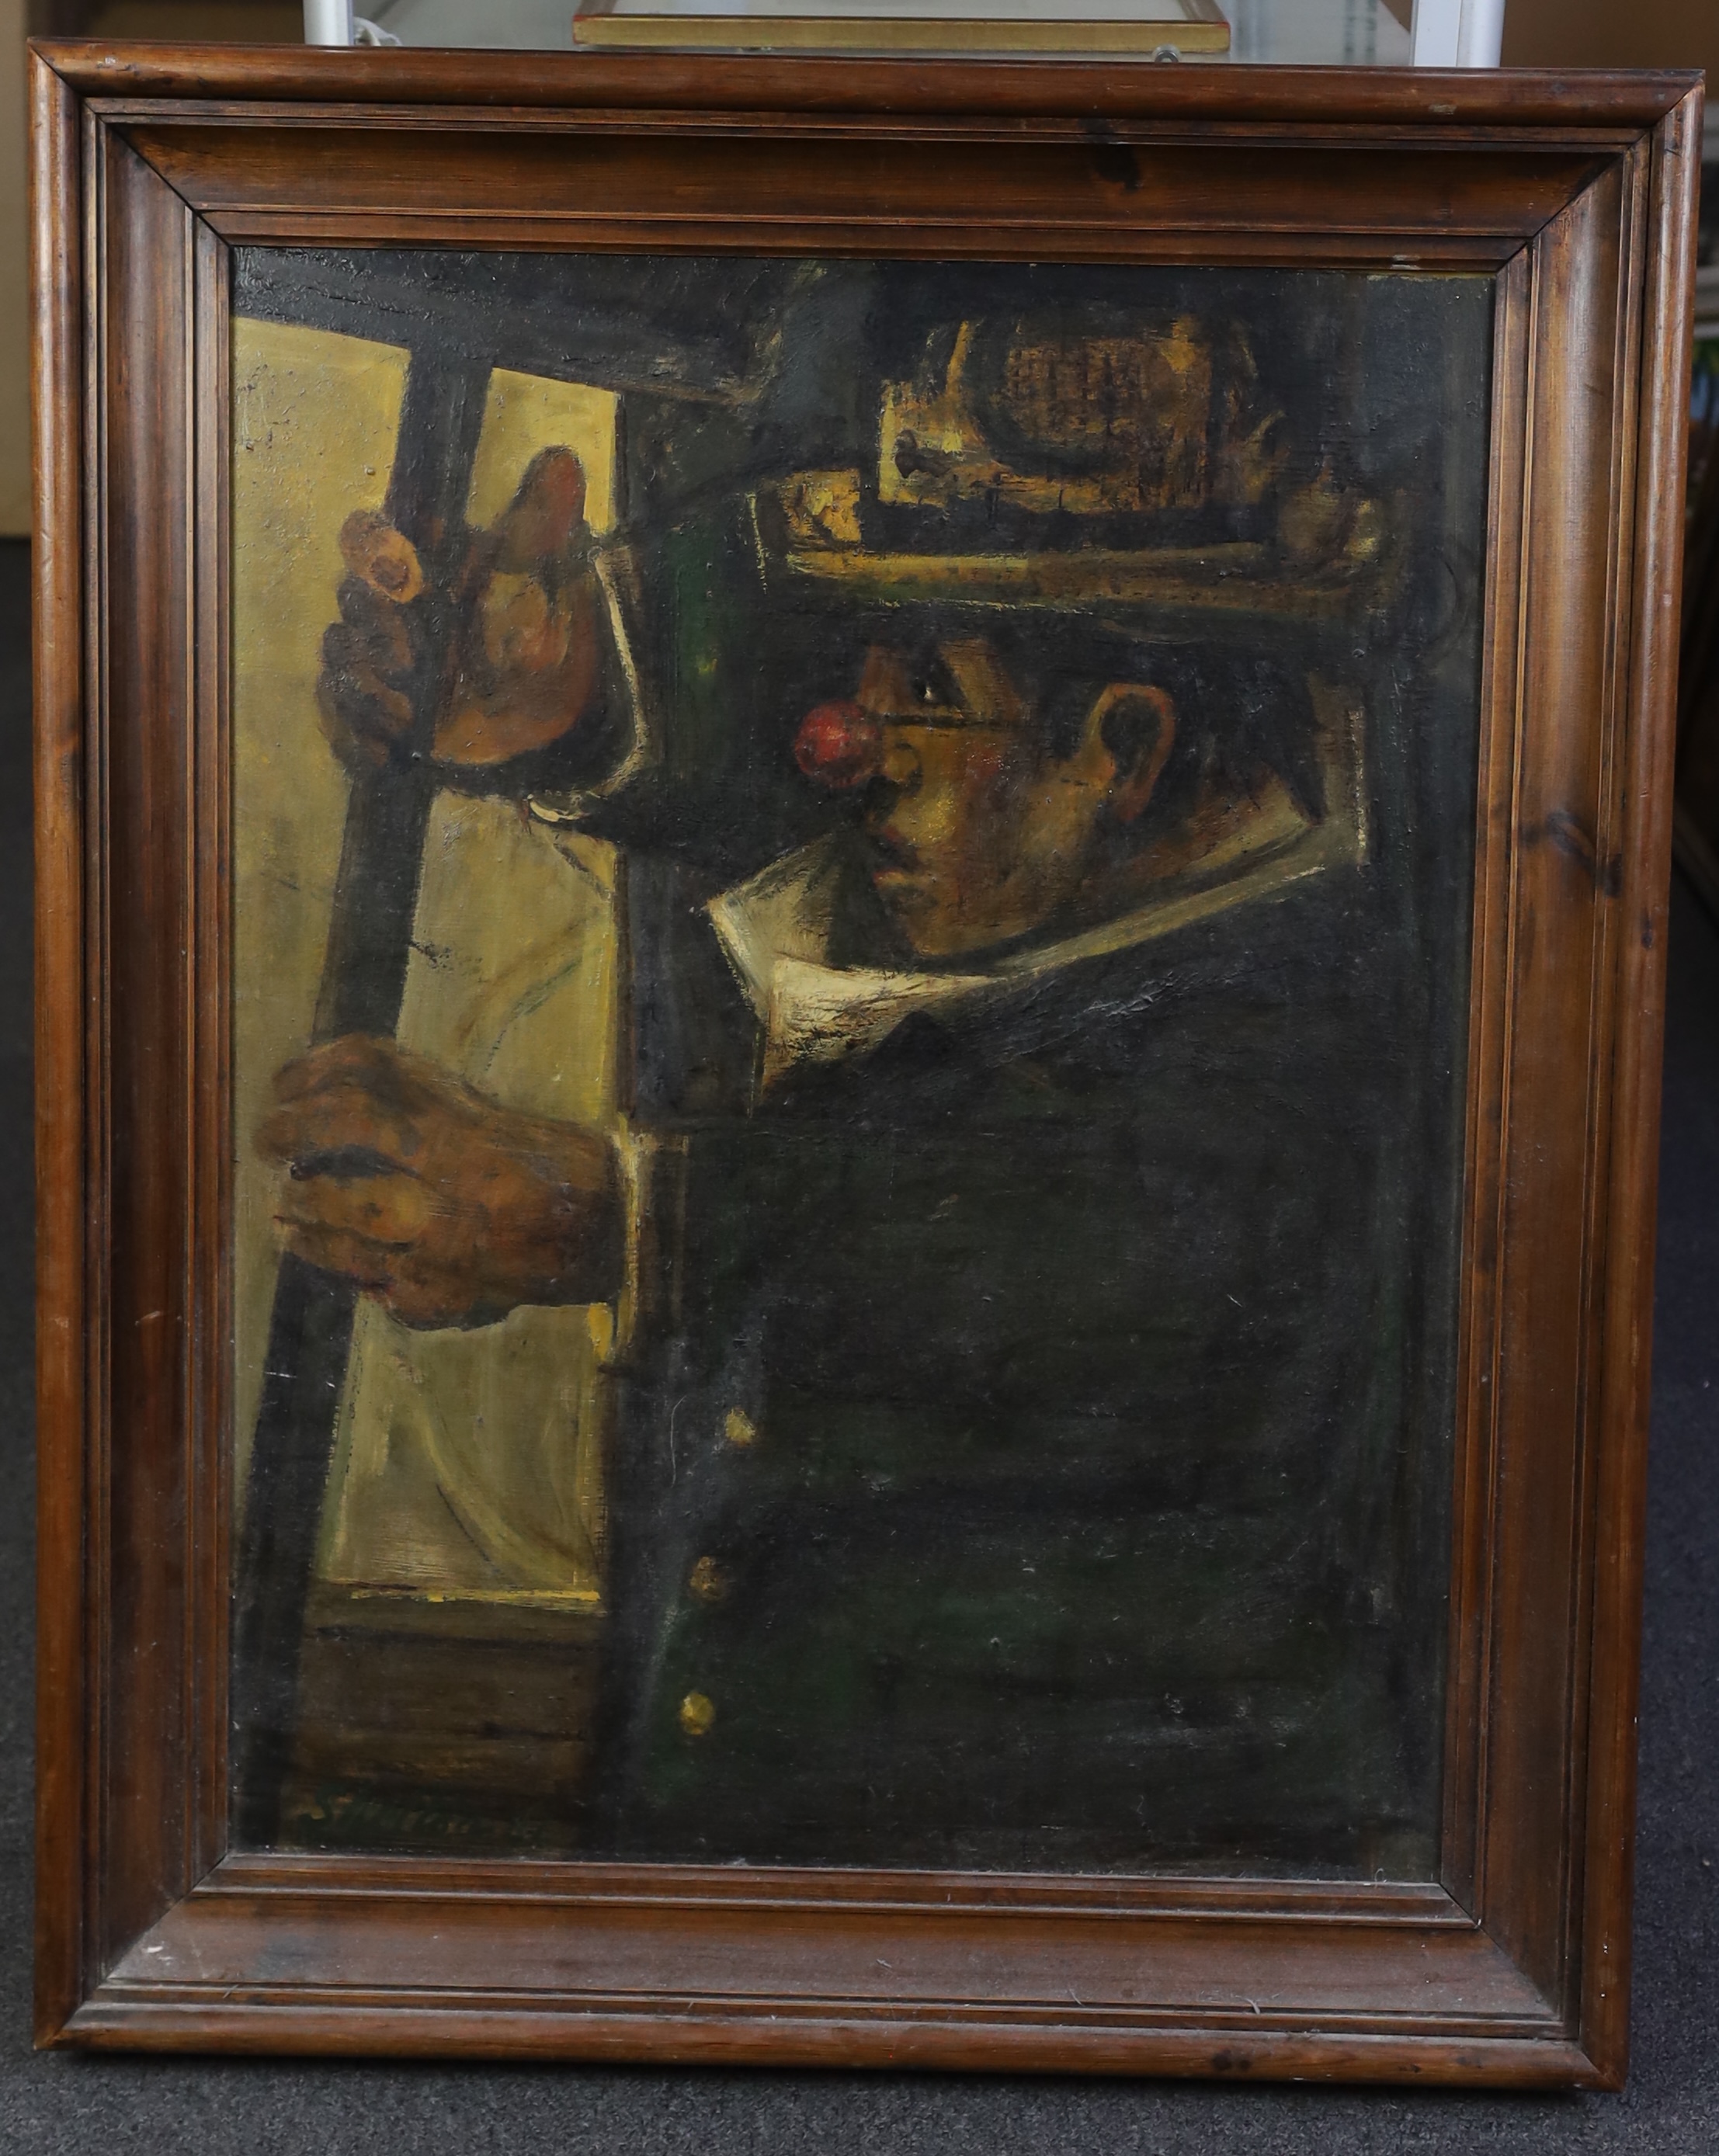 John Shelton (British, 1923-1993), Study of a clown, oil on board, 79 x 60cm